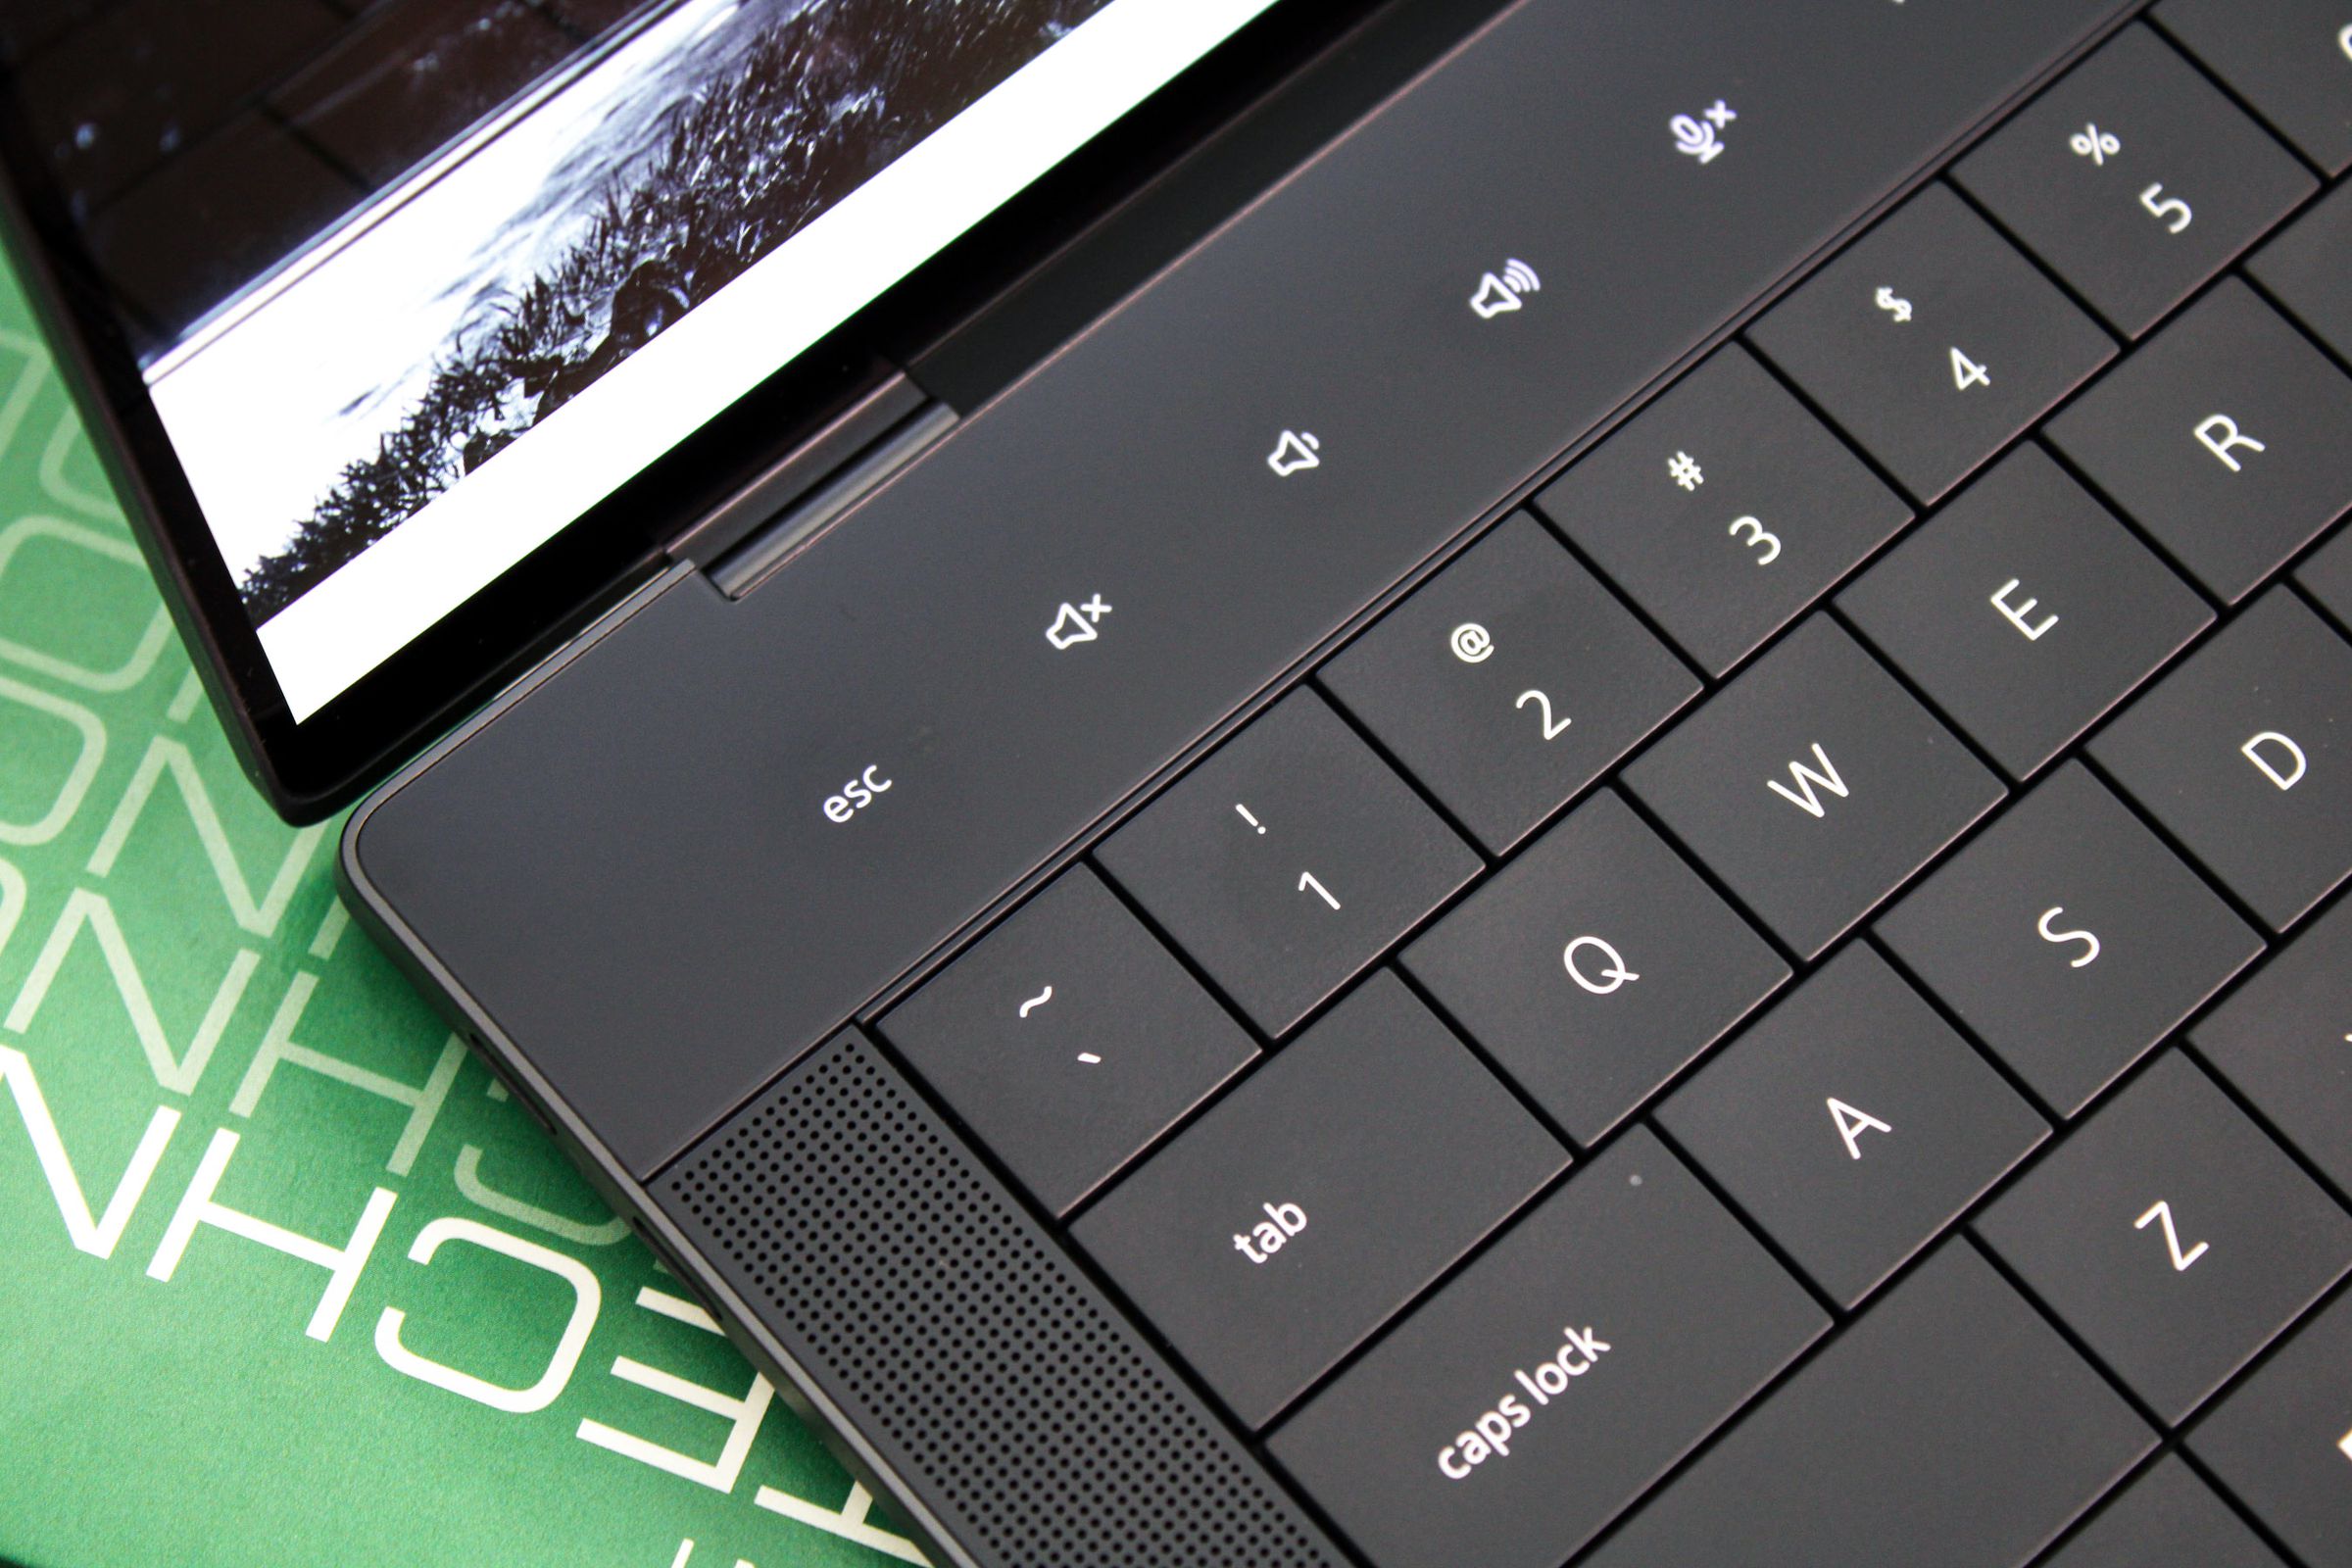 A close up of keys on a laptop keyboard.